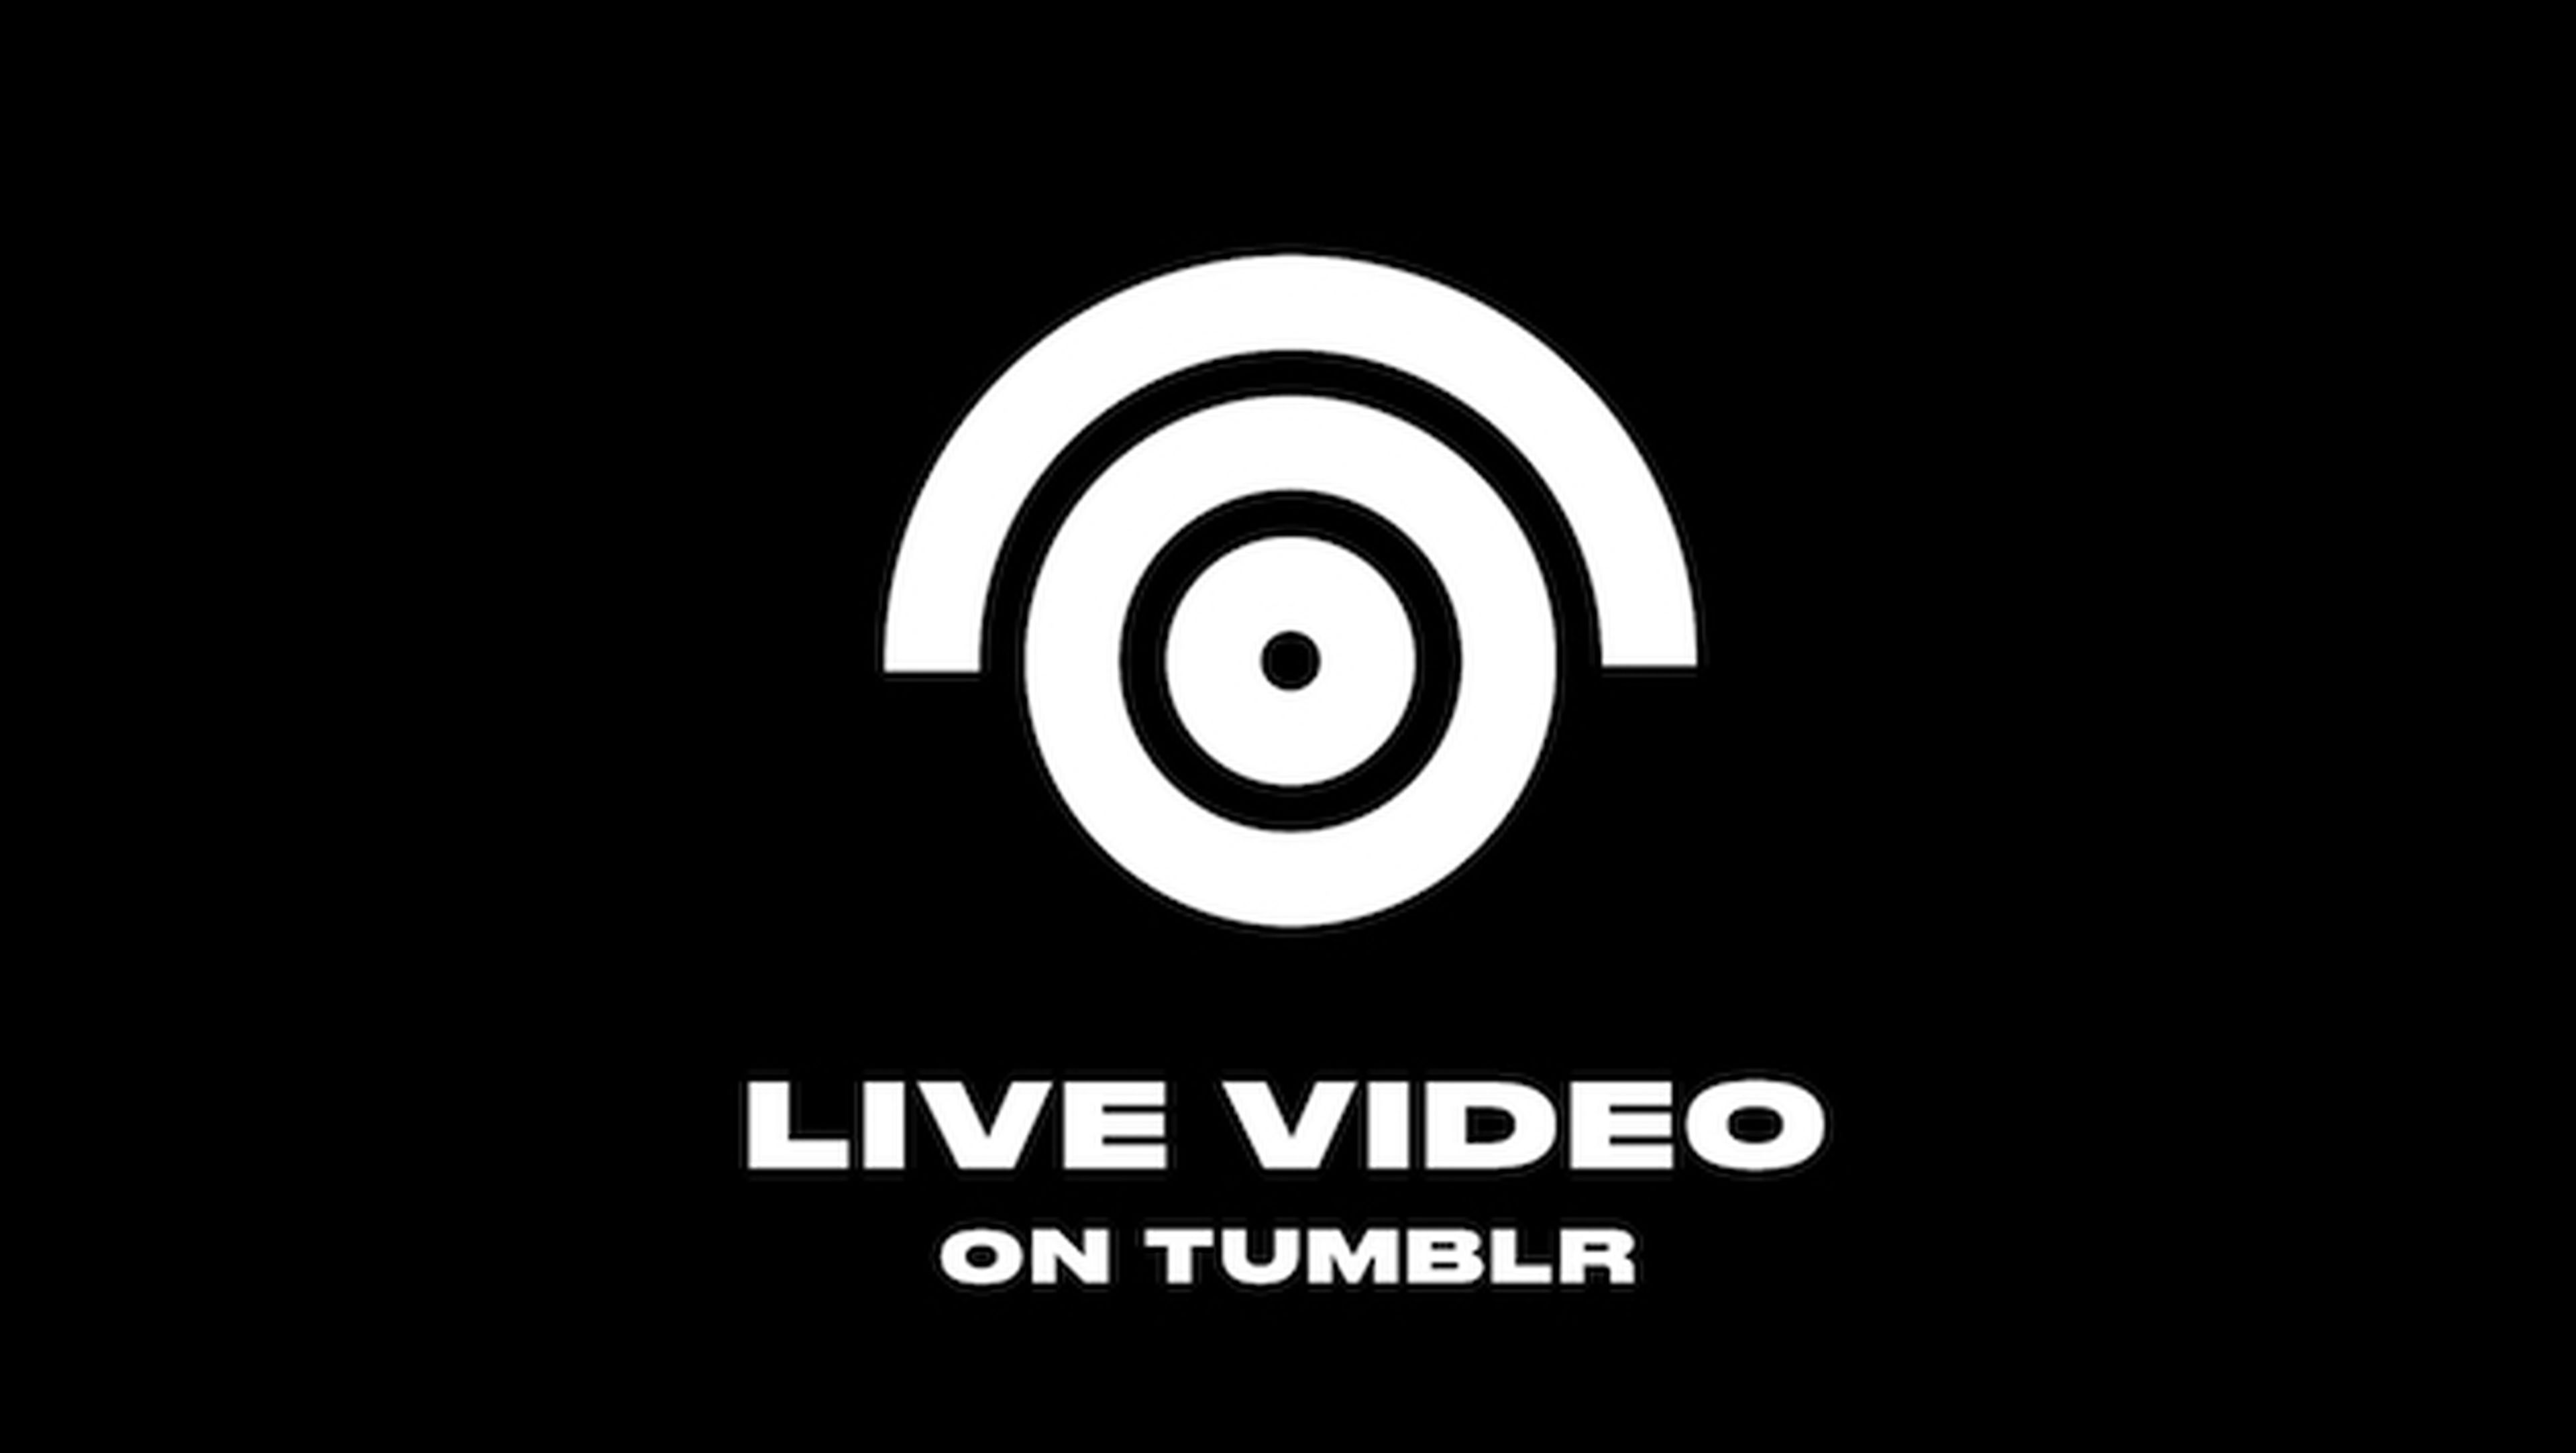 Tumblr introduce streaming de vídeo en vivo